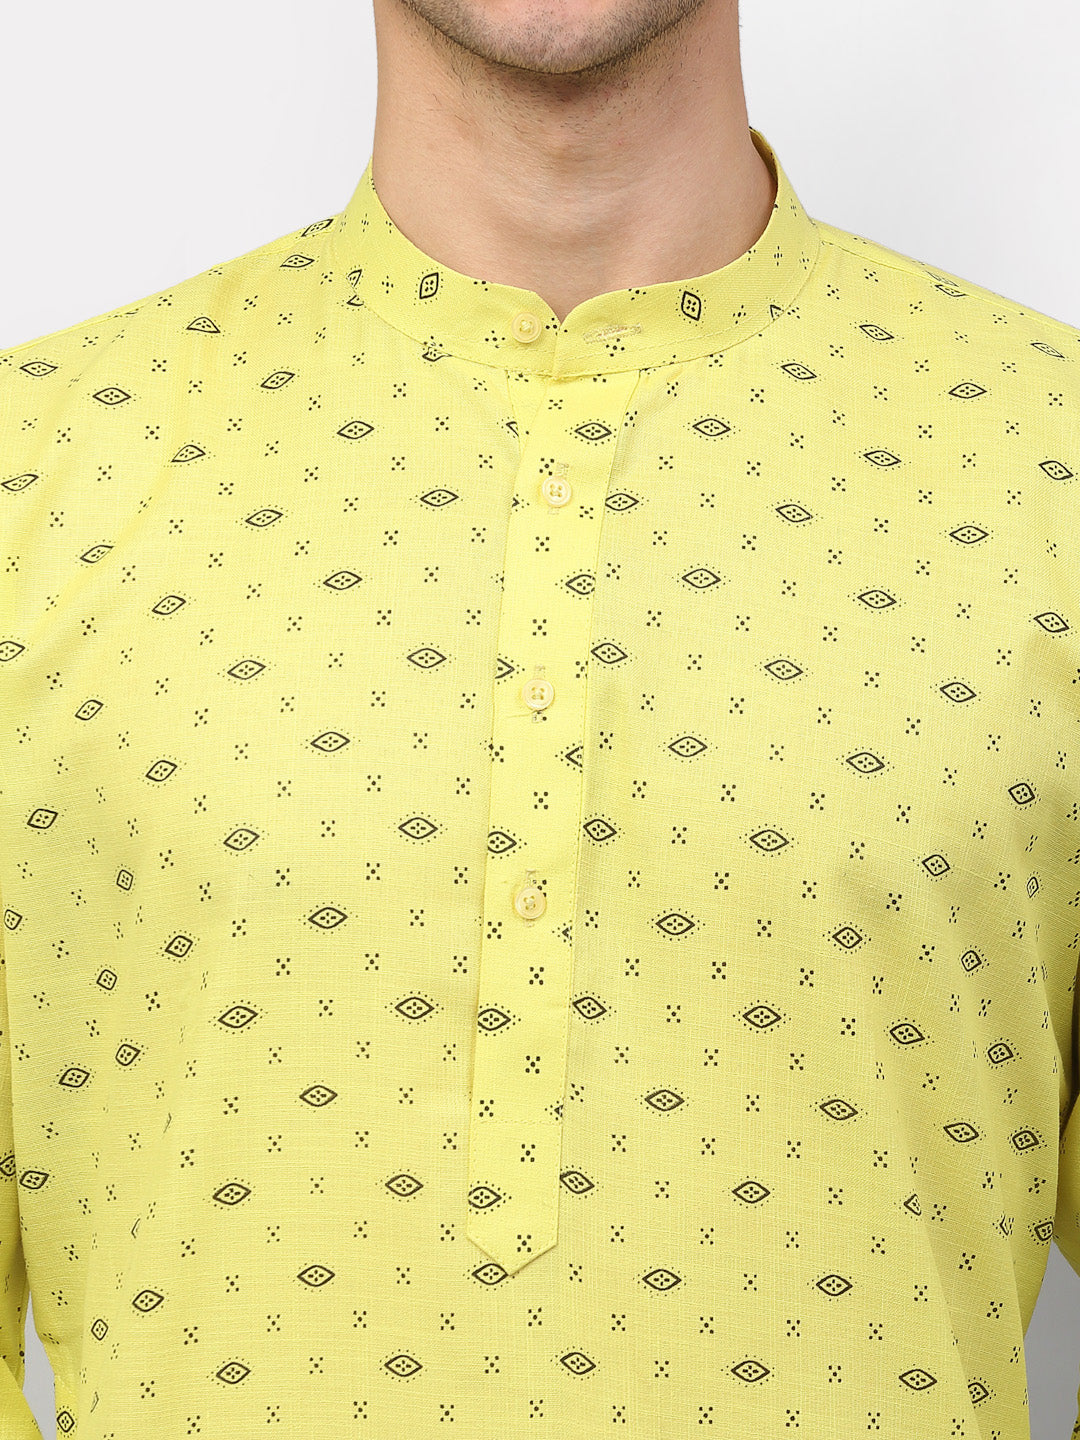 Men's Lemon Printed Cotton Kurta Payjama Sets ( JOKP 614 Lemon ) - Virat Fashions